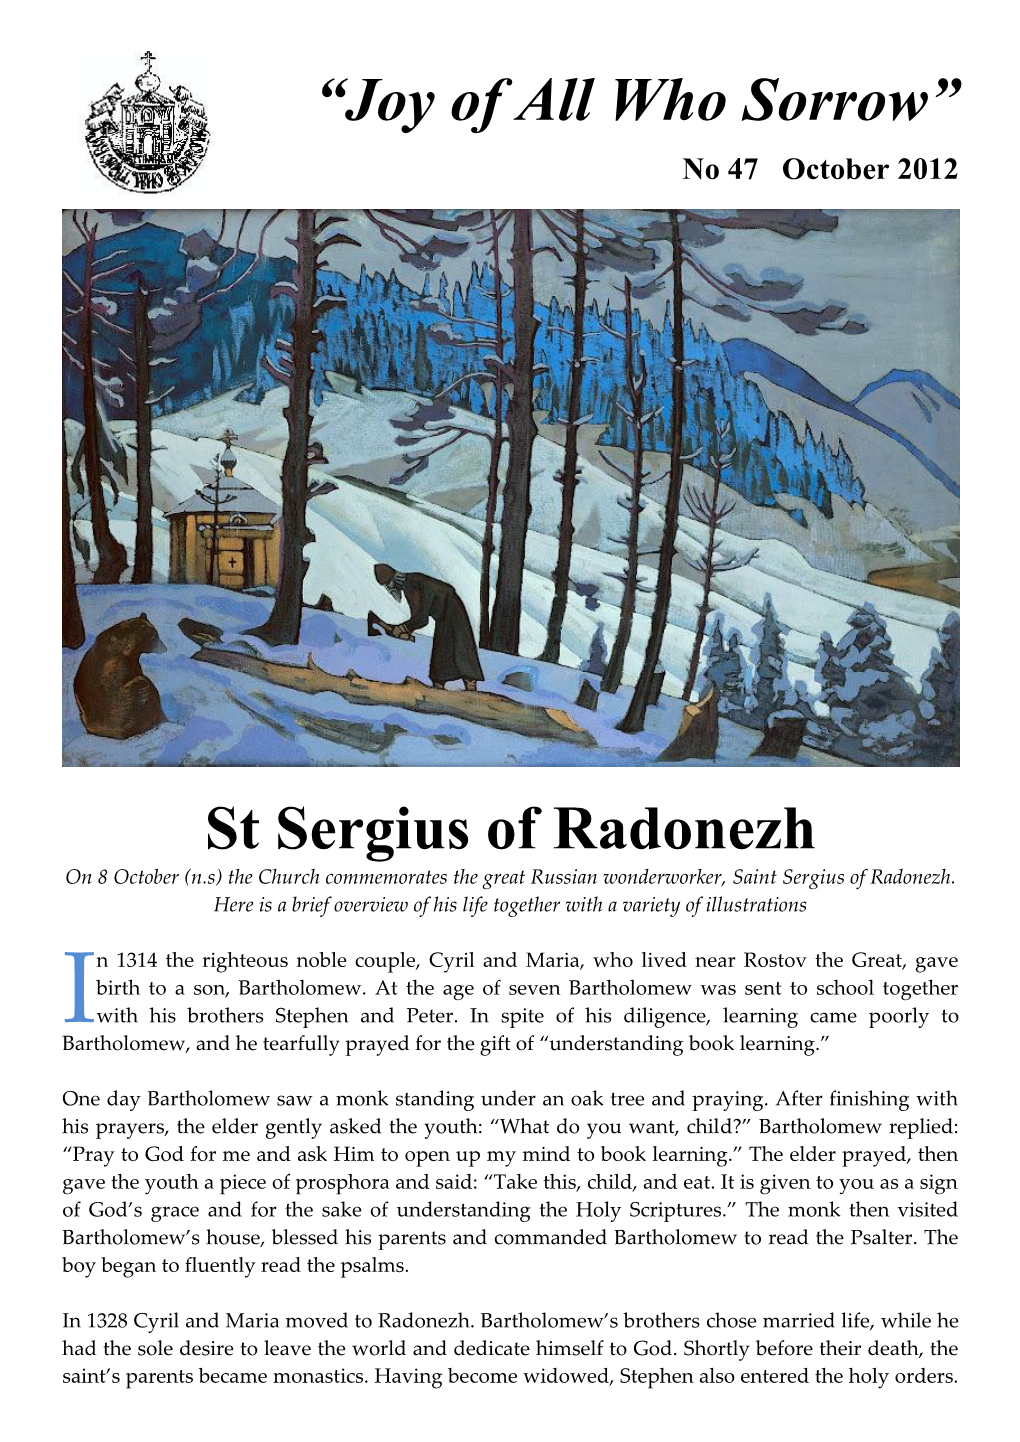 St Sergius of Radonezh on 8 October (N.S) the Church Commemorates the Great Russian Wonderworker, Saint Sergius of Radonezh